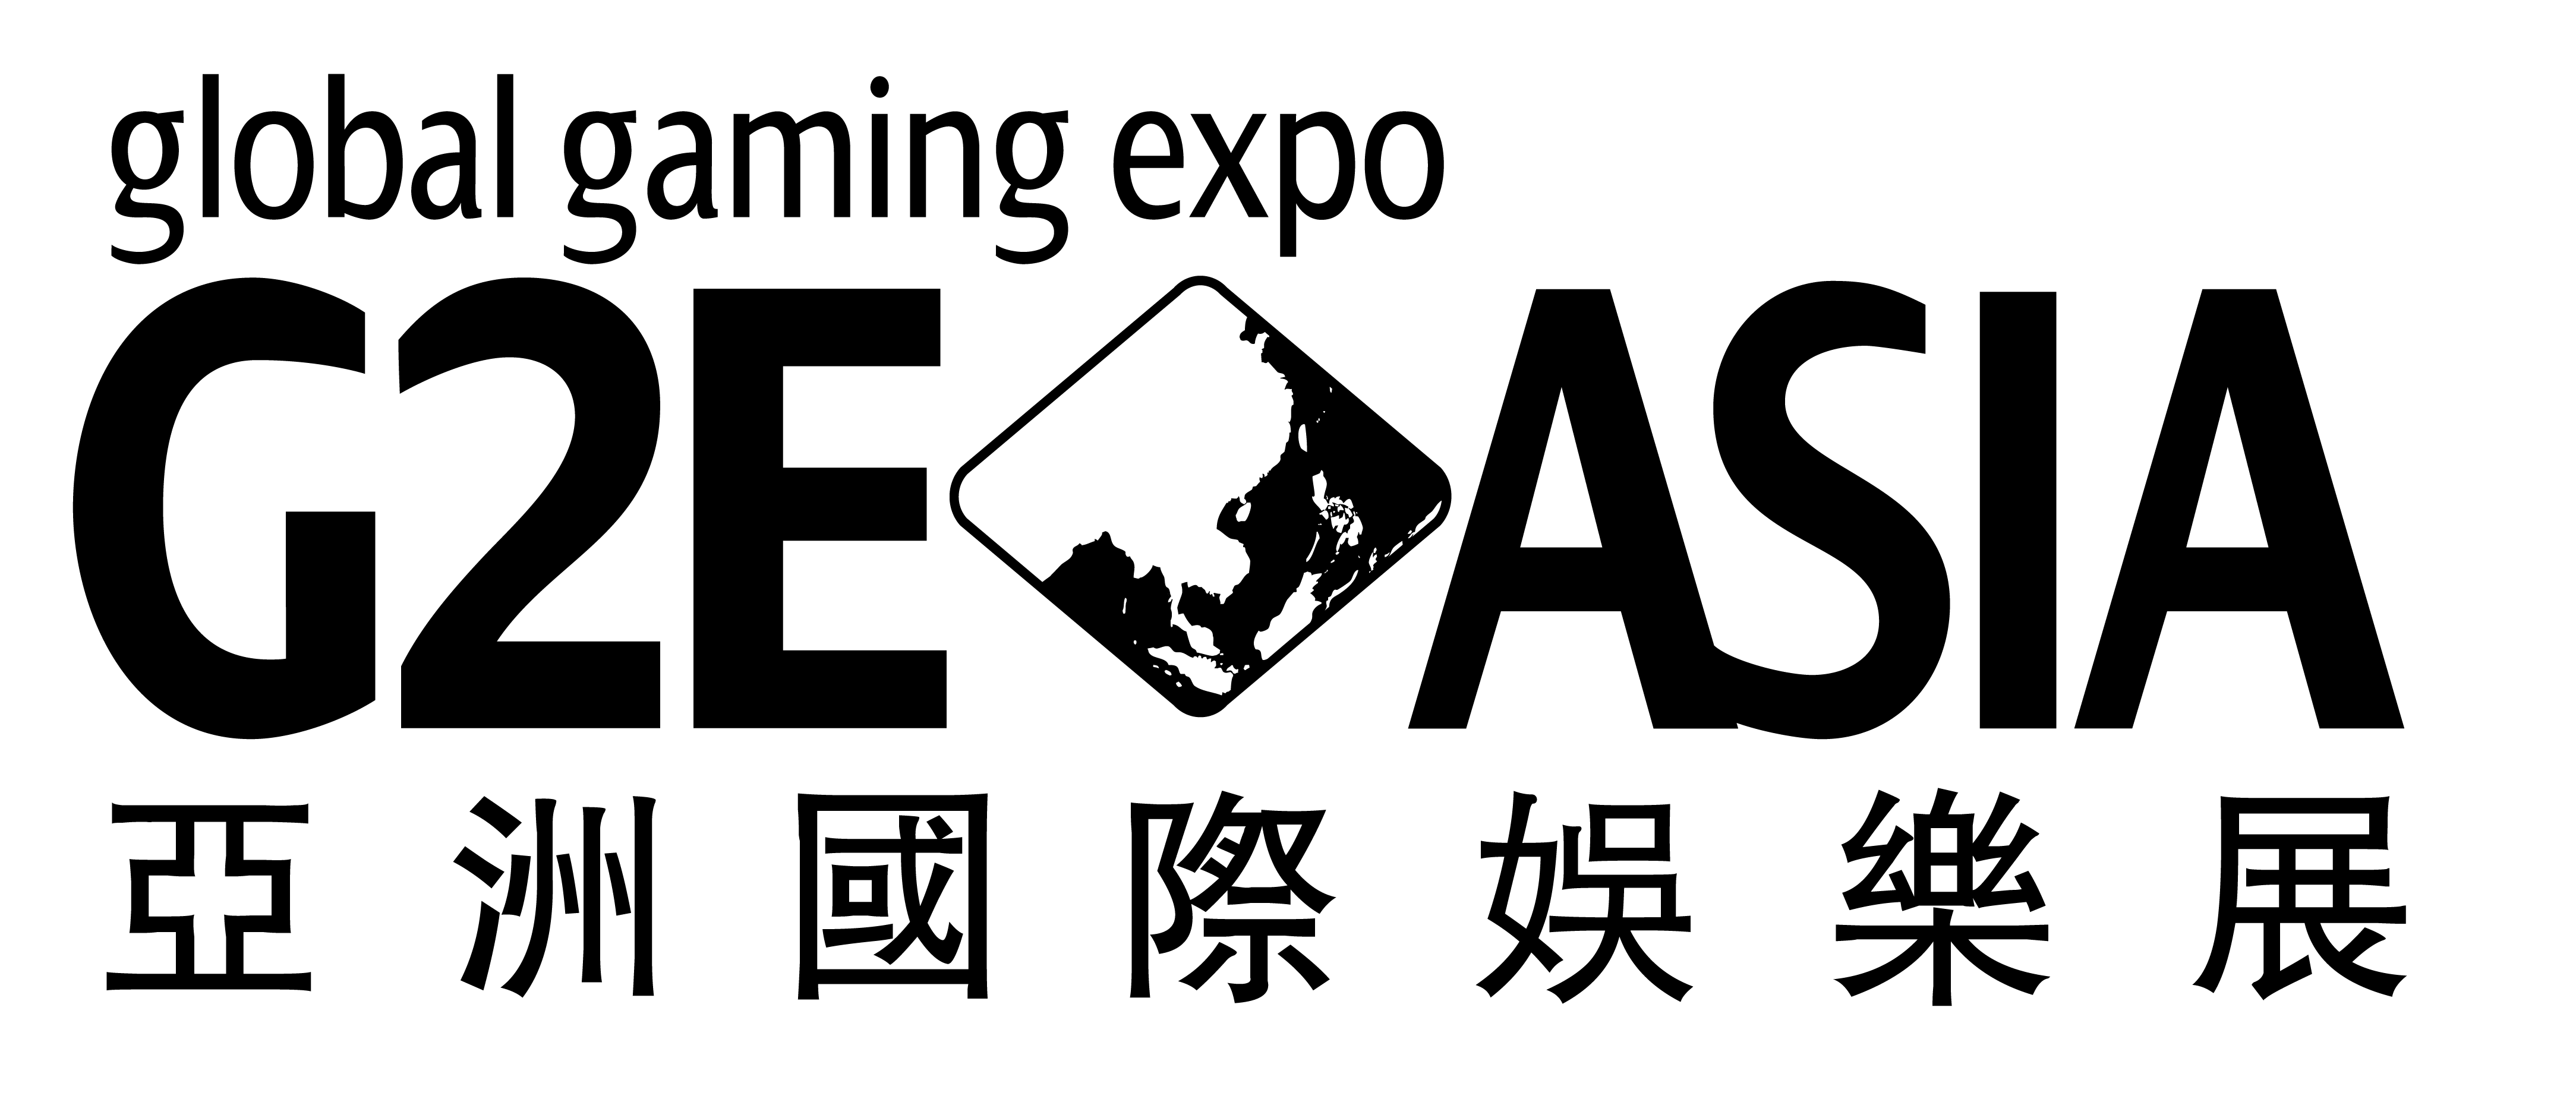 Asia Logo - Download Show Logos - G2E Asia | Global Gaming Expo Asia 2019